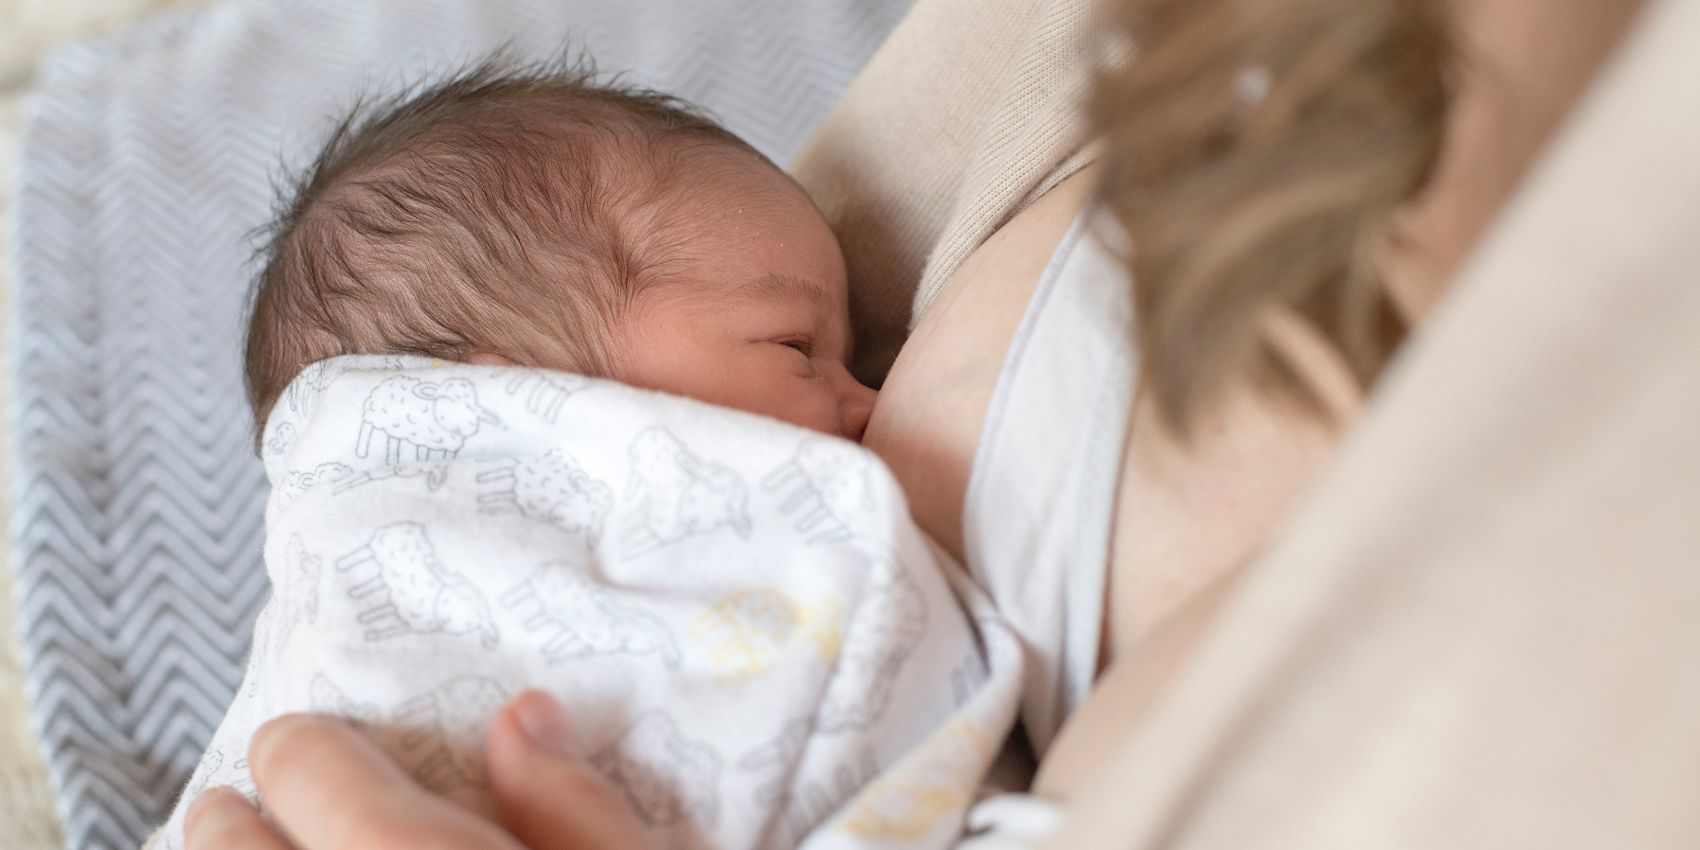 Closeup of woman breastfeeding a newborn baby in a hospital bed